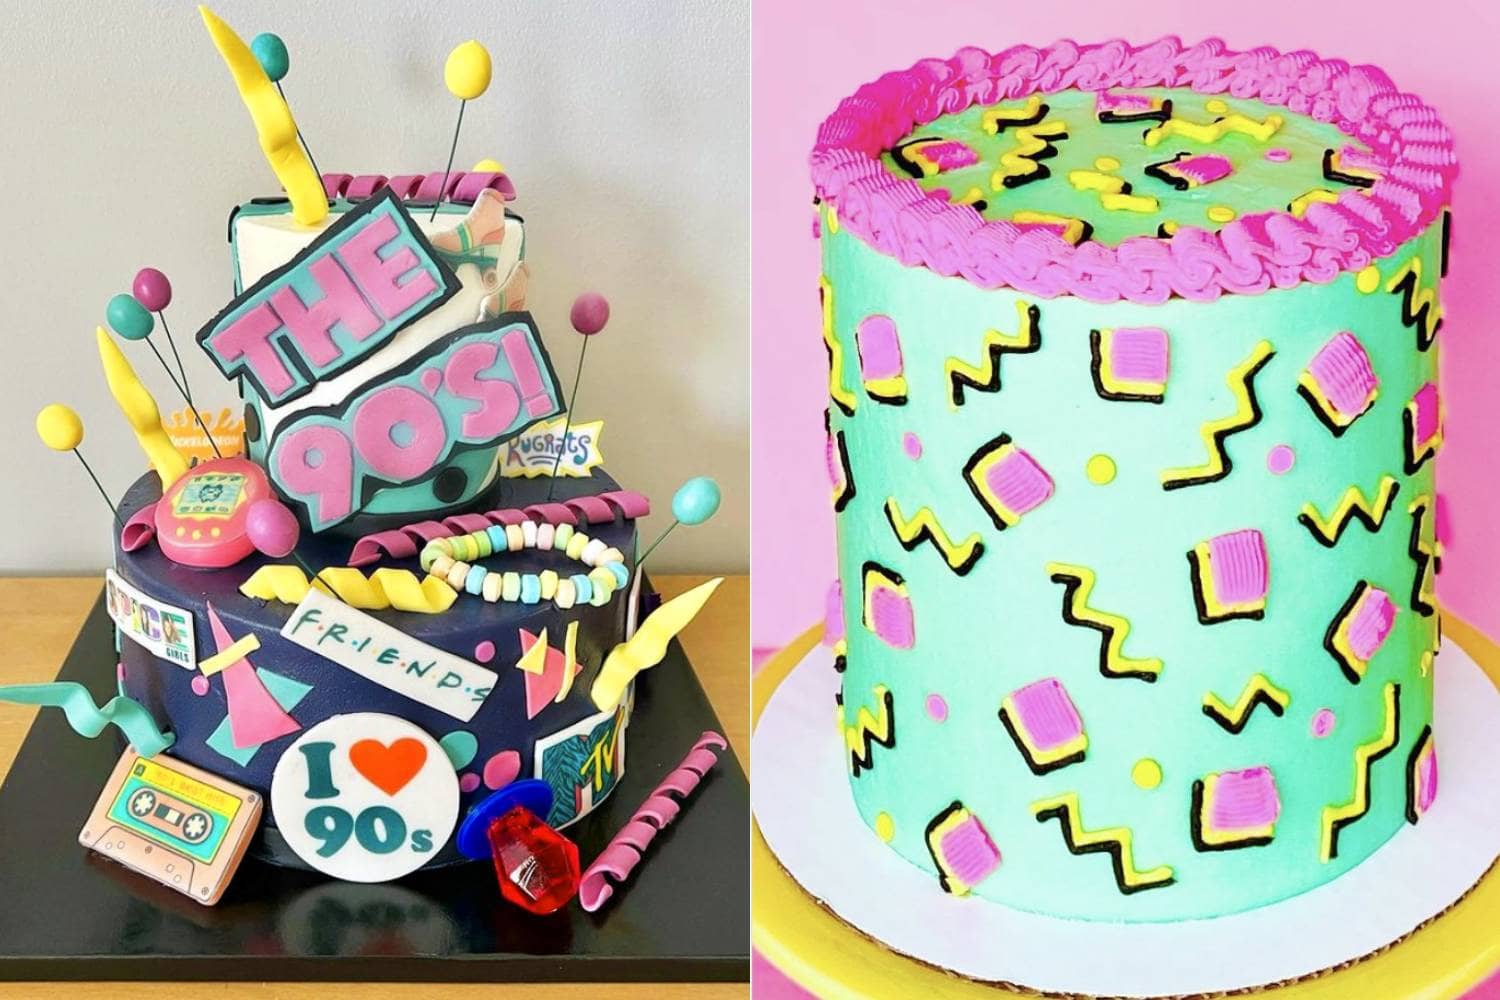 F.R.I.E.N.D.S Themed Birthday cake